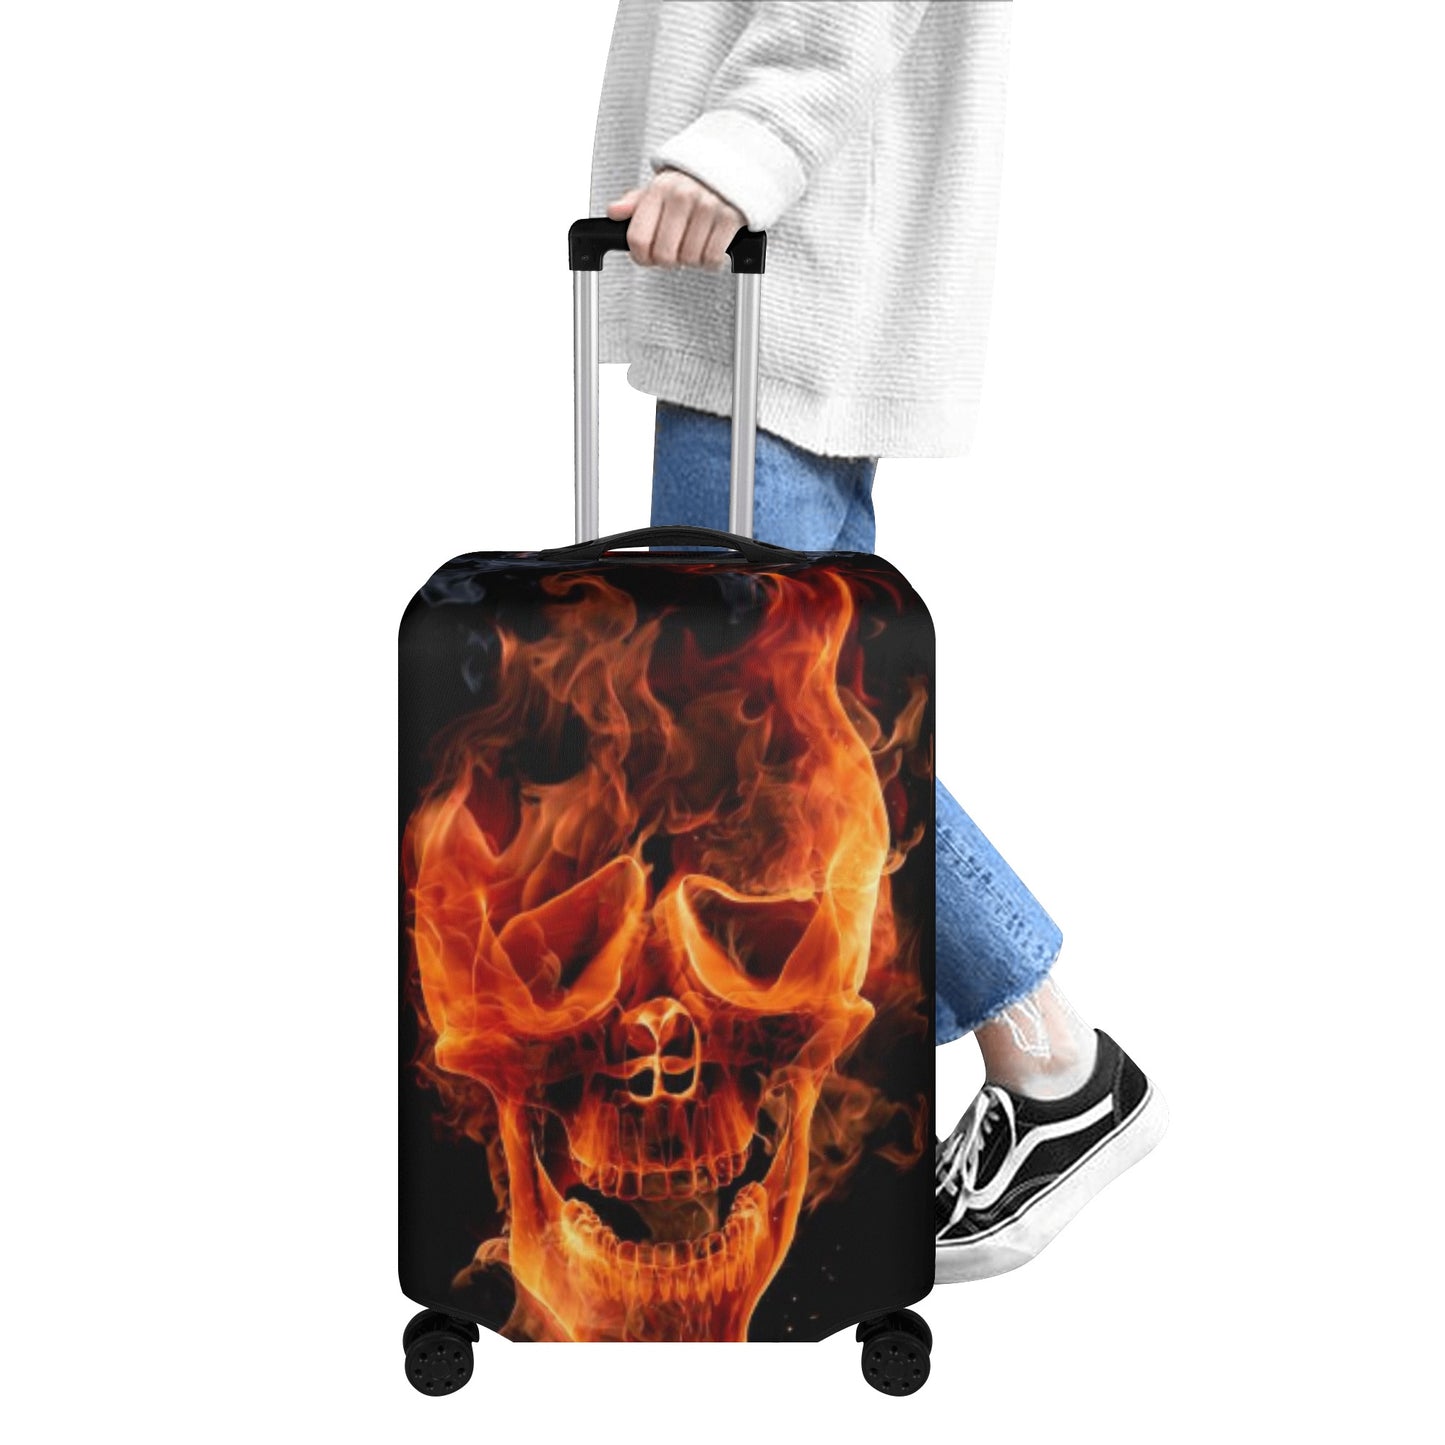 Flaming skull gothic skeleton luggage suitcase covers